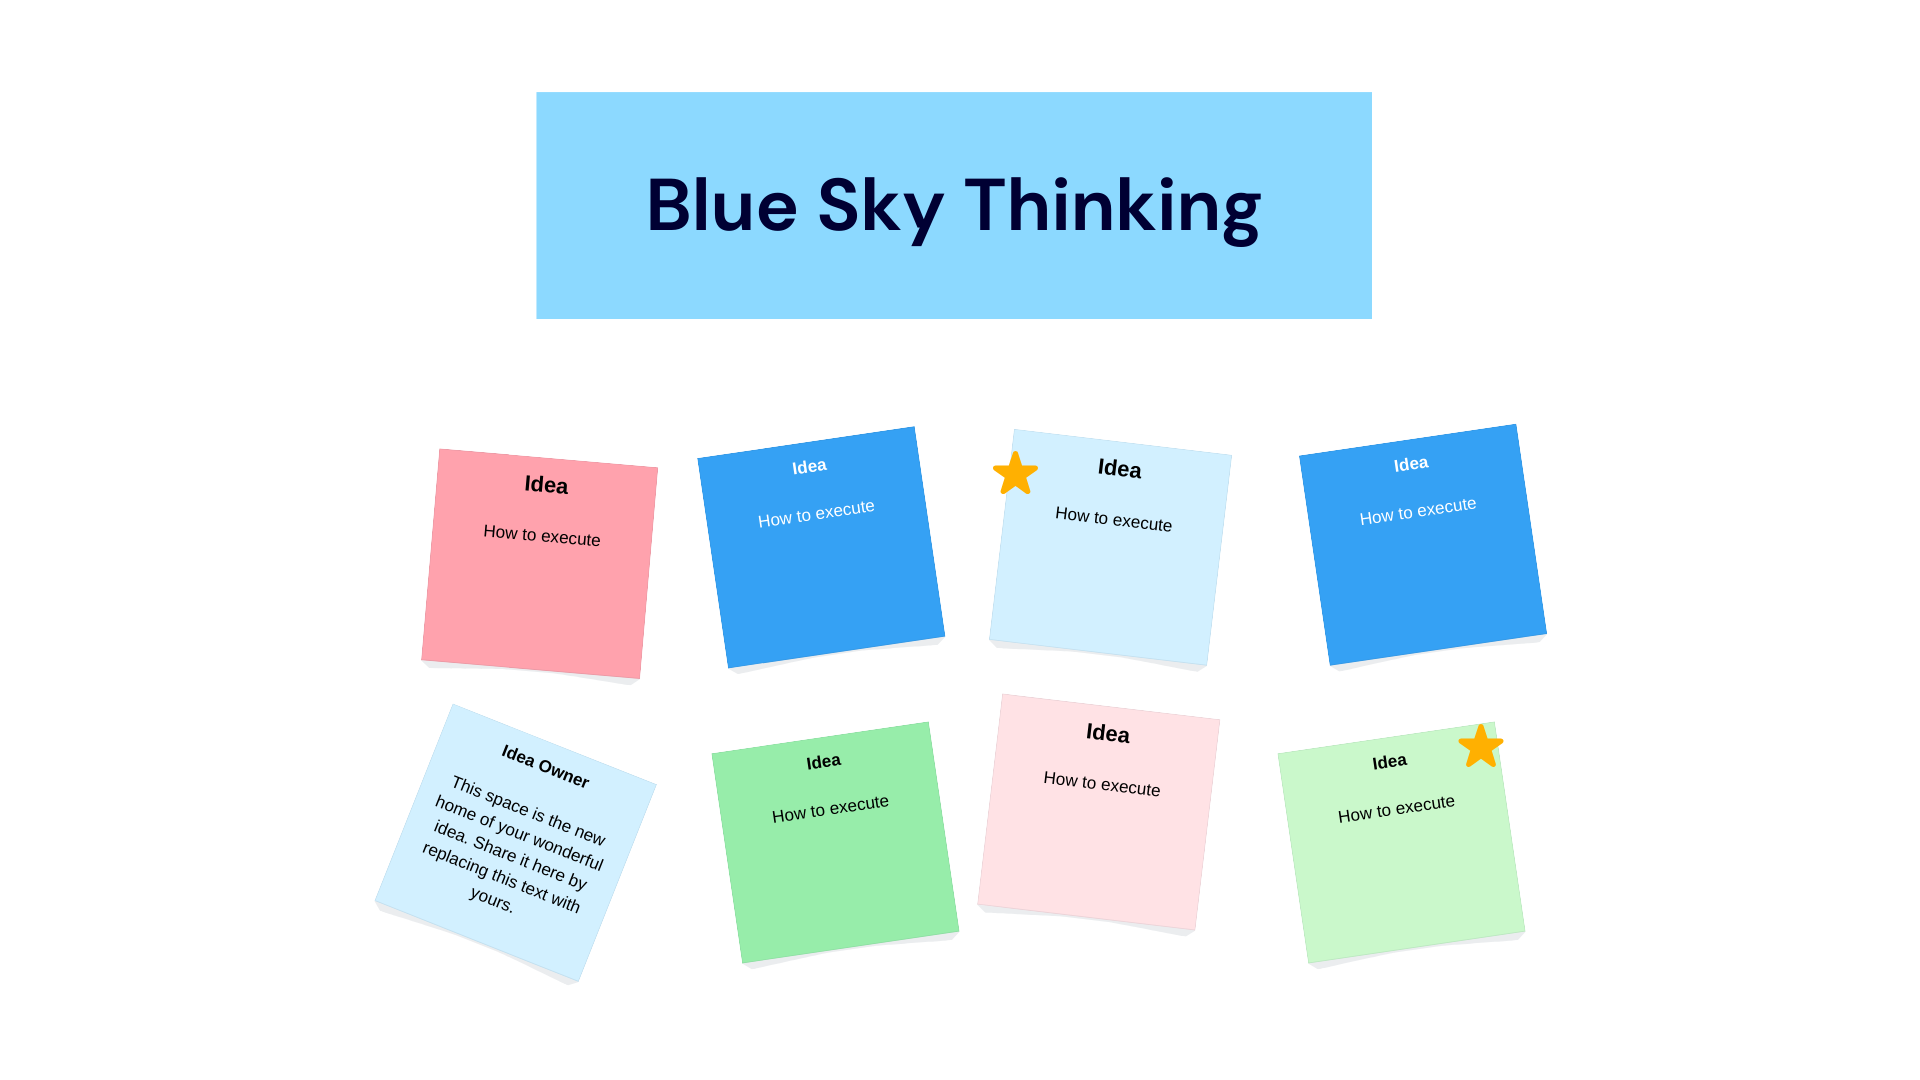 blue sky thinking